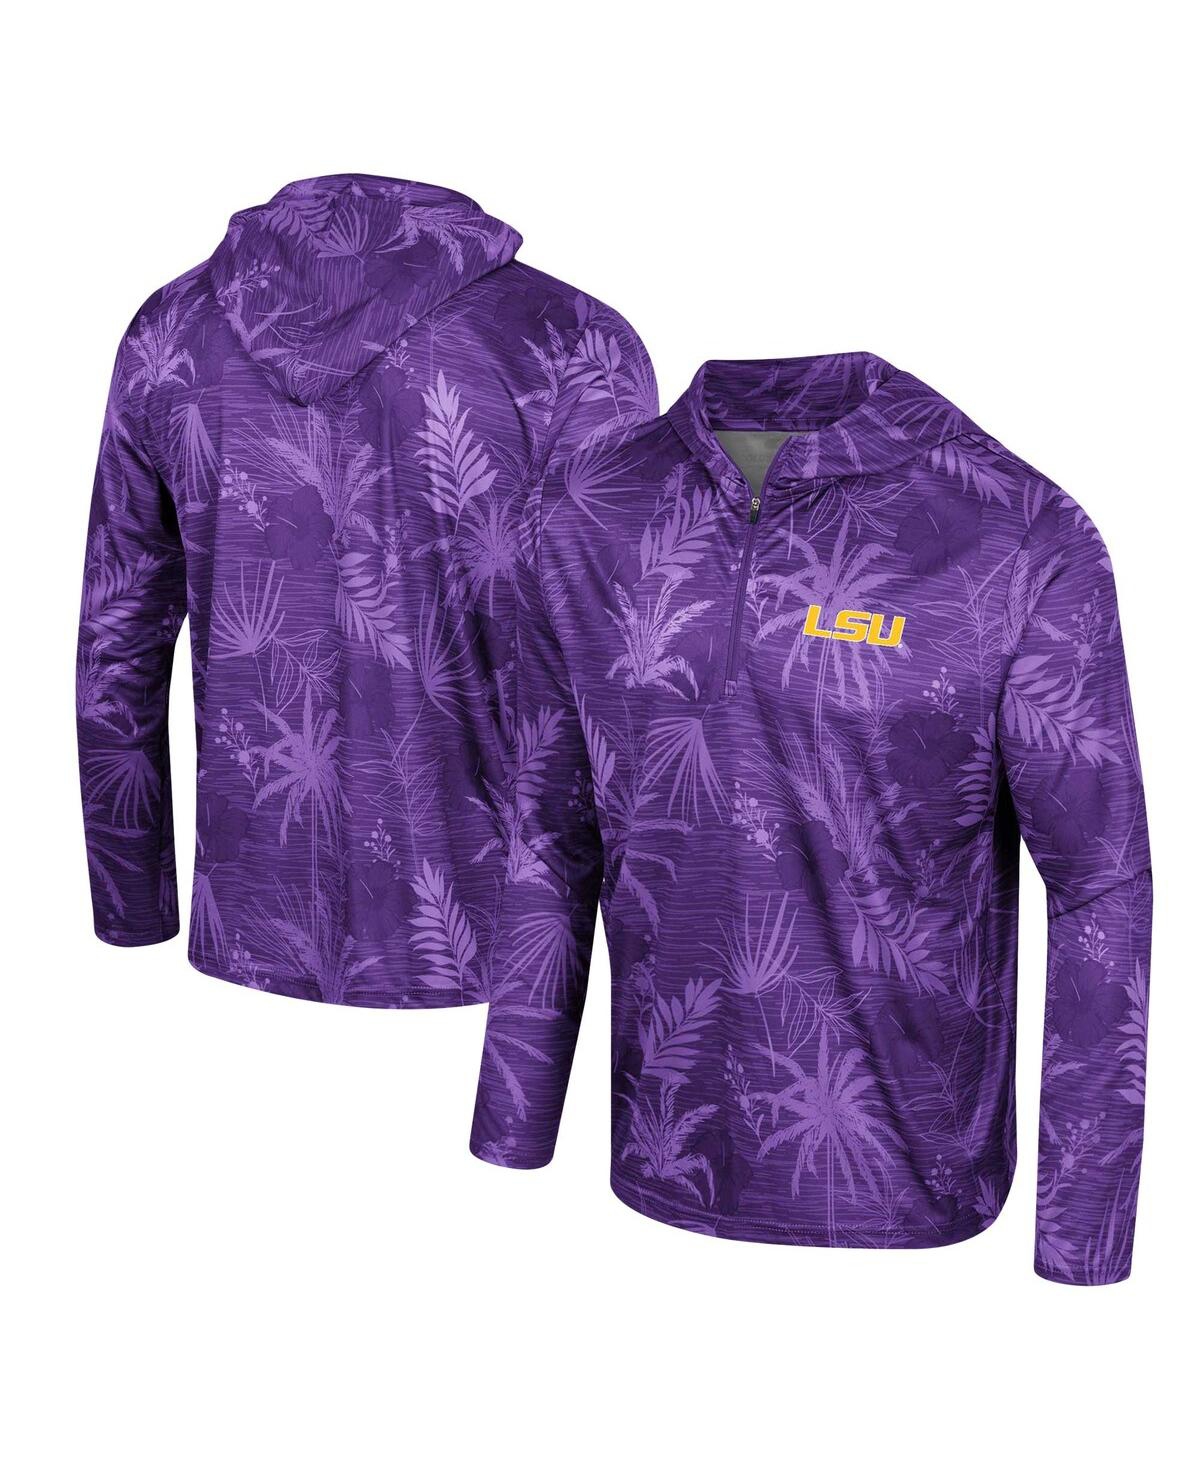 Shop Colosseum Men's  Purple Lsu Tigers Palms Printed Lightweight Quarter-zip Hooded Top